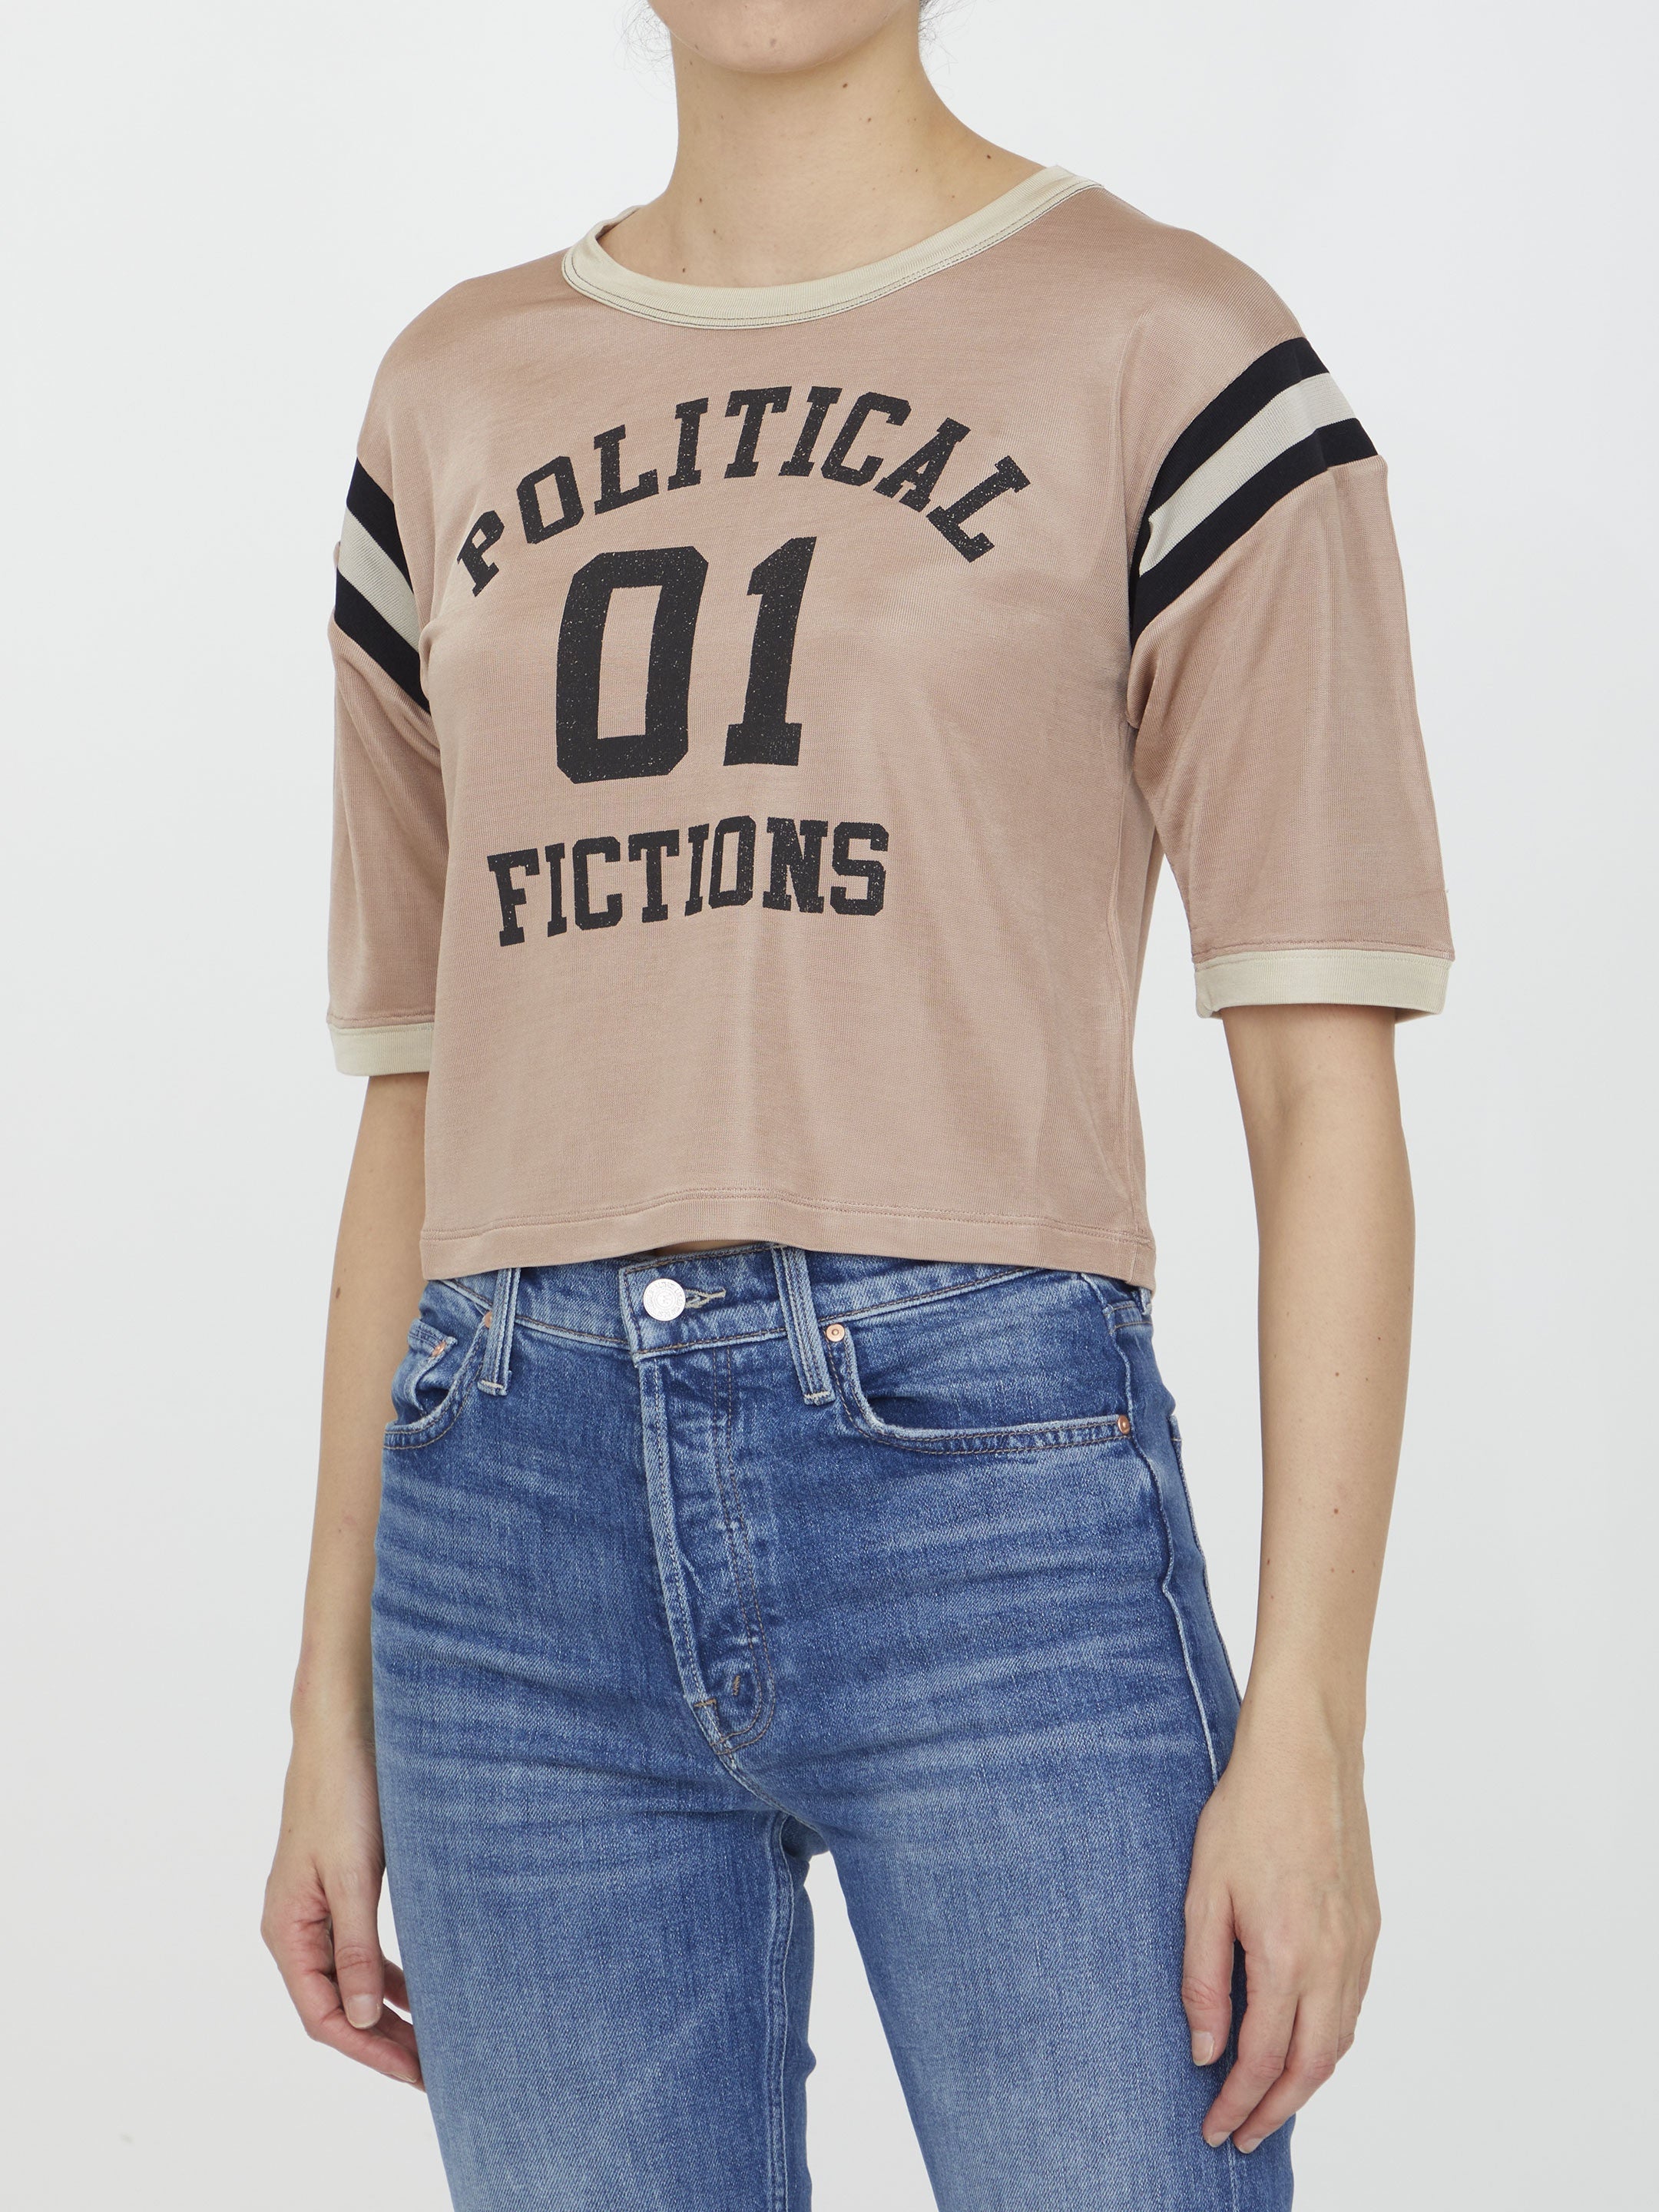 SAINT-LAURENT-OUTLET-SALE-Political-Fictions-cropped-t-shirt-Shirts-S-PINK-ARCHIVE-COLLECTION-2.jpg